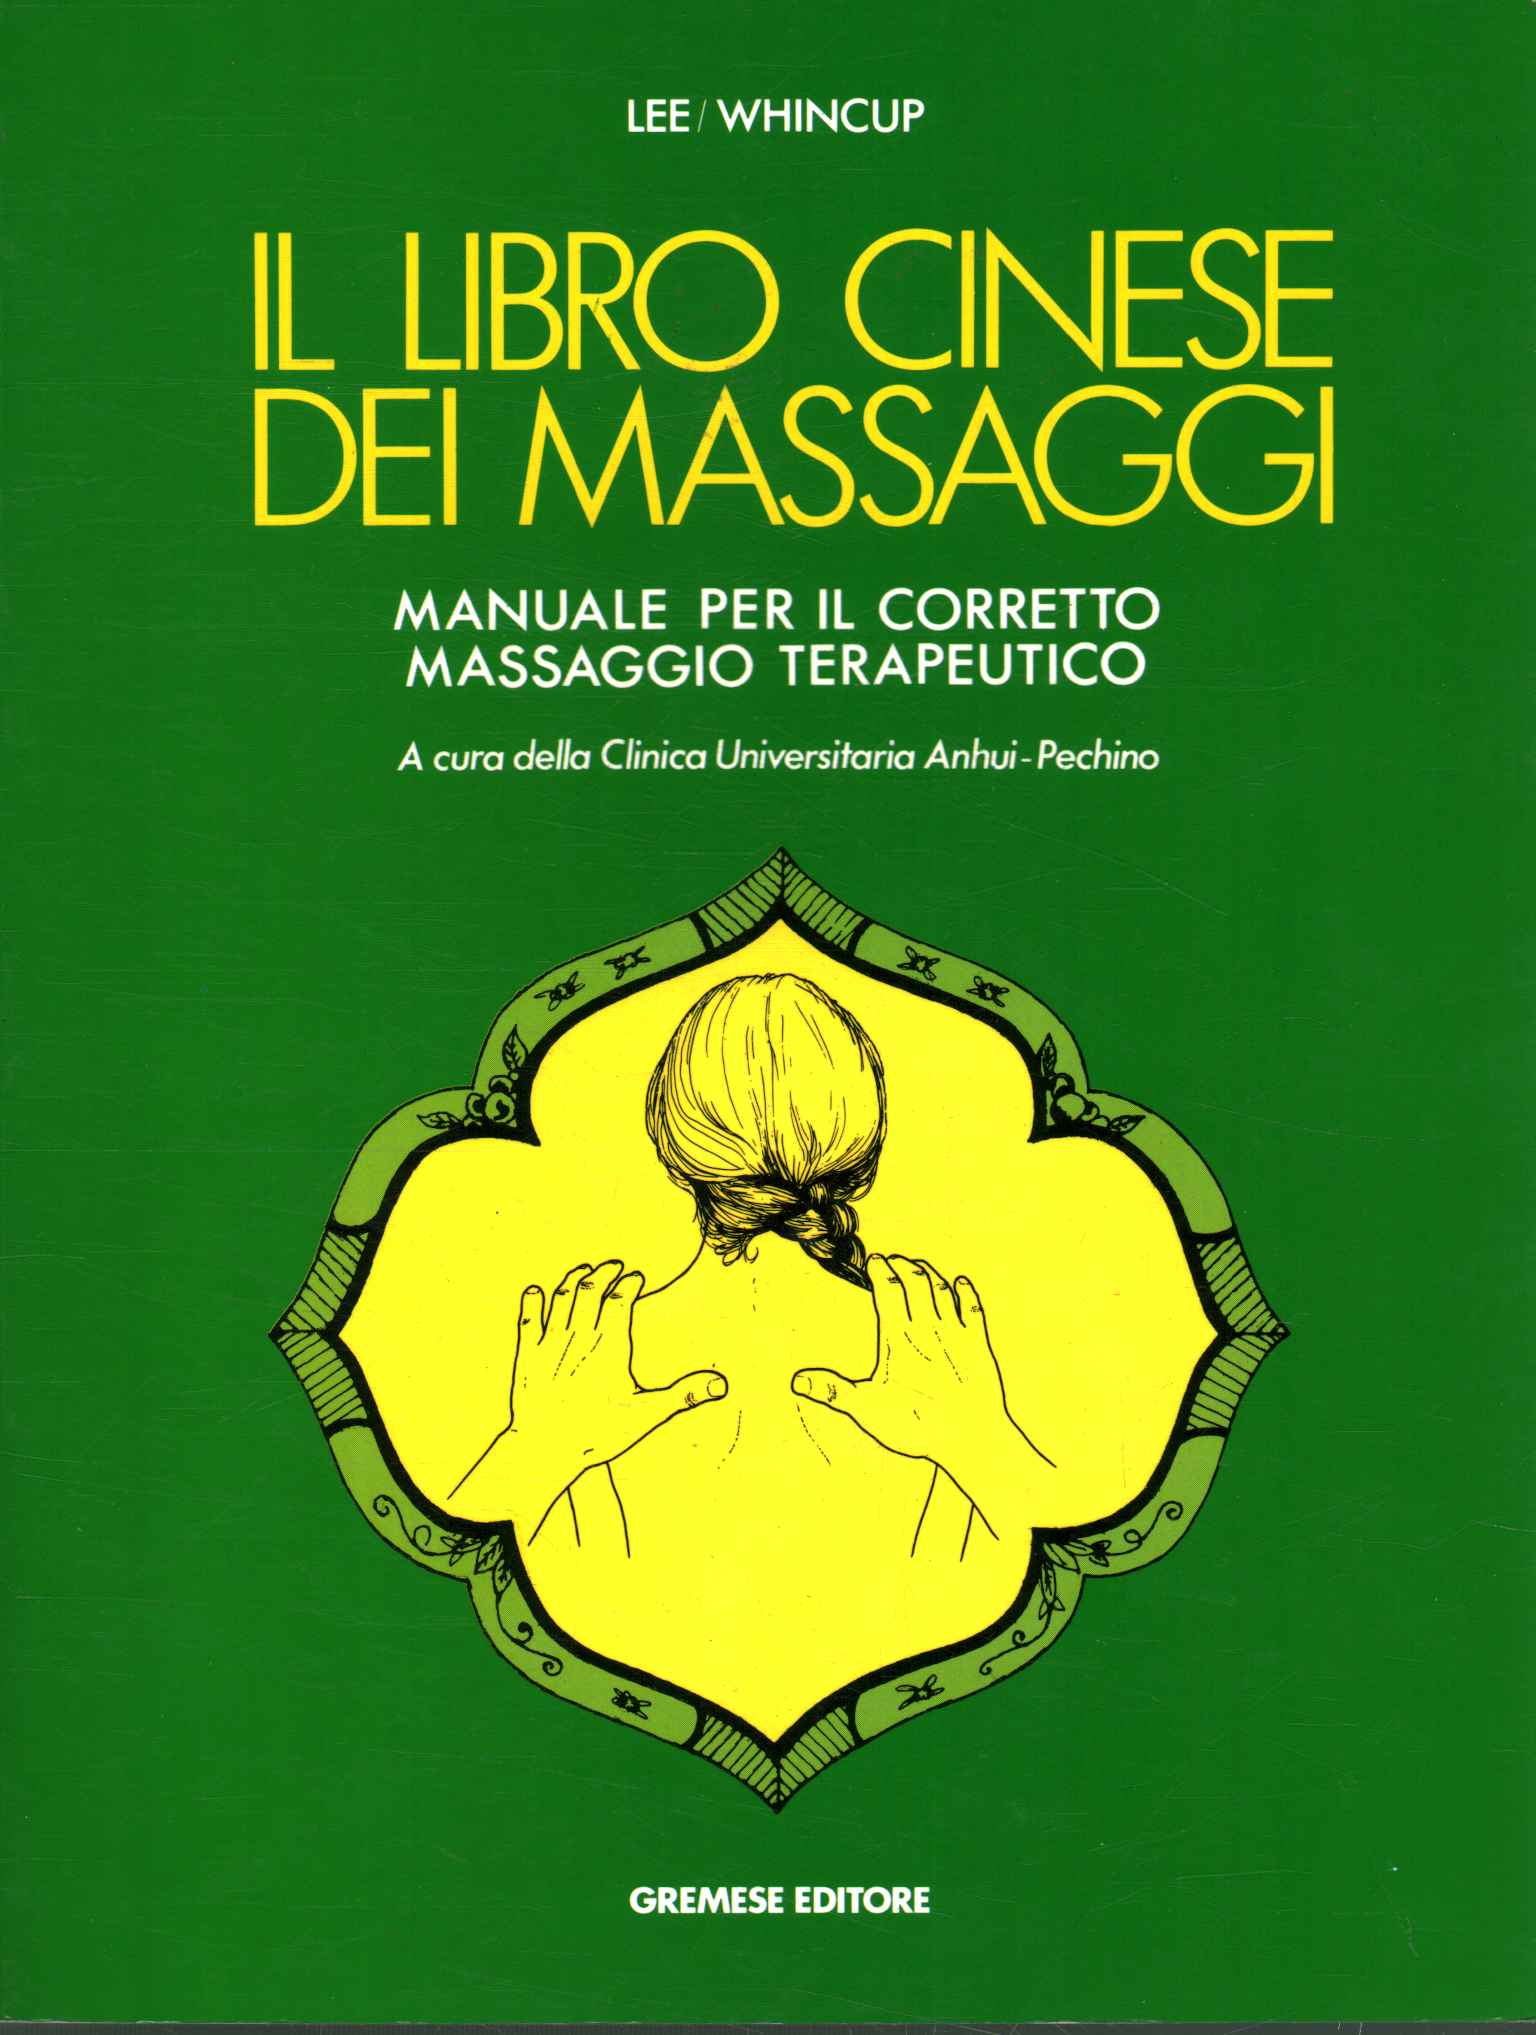 The Chinese Massage Book